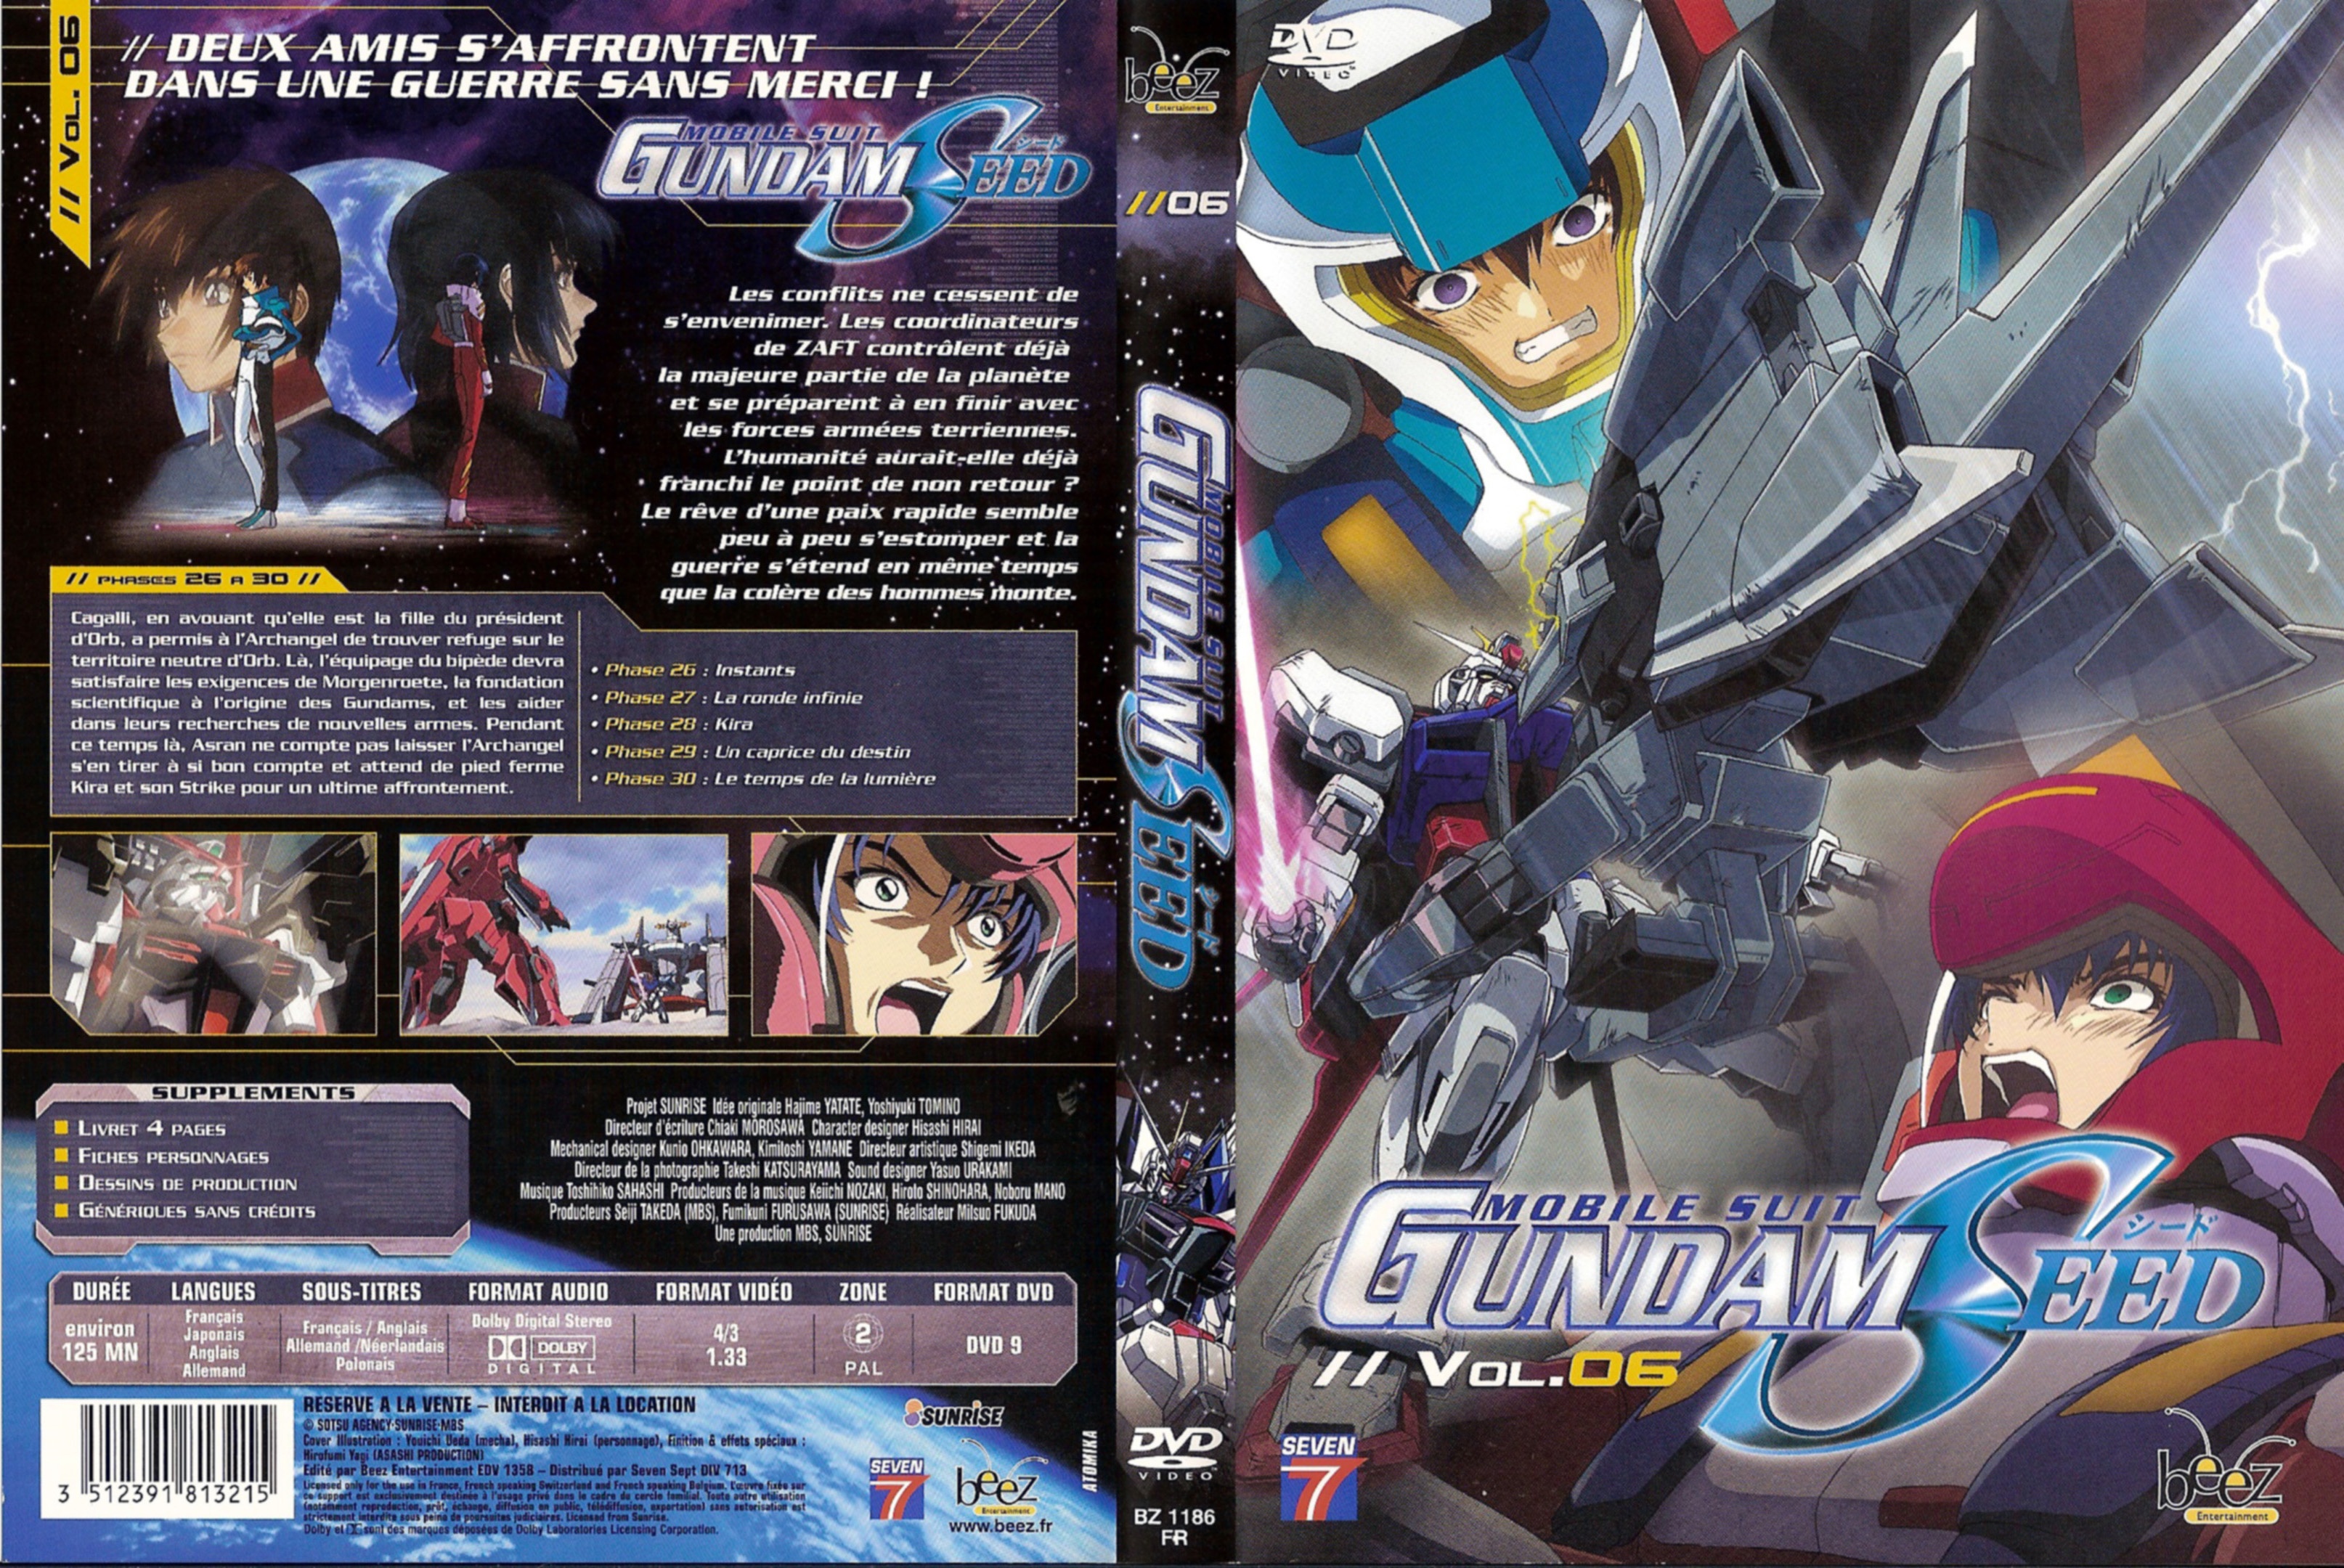 Jaquette DVD Gundam seed vol 06